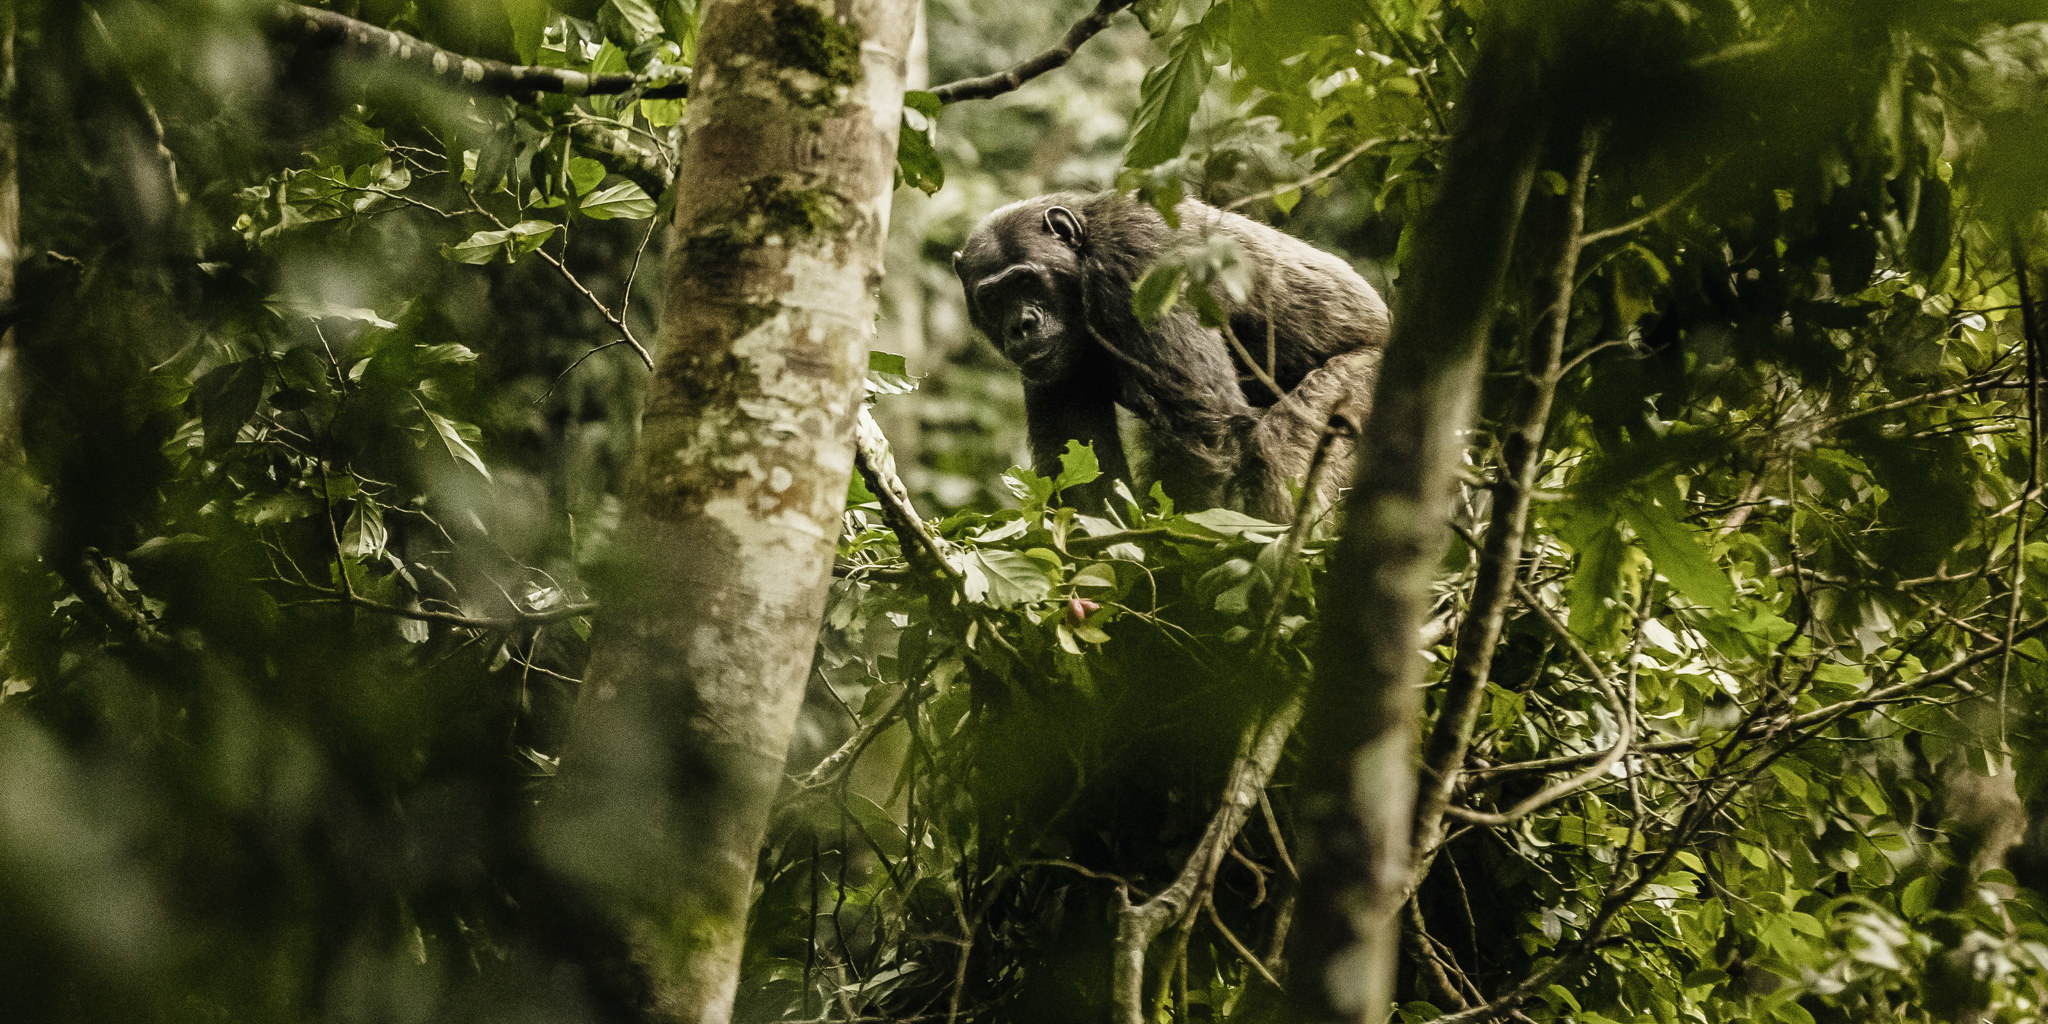 chimpanzee in nyungwe forest national park, rwanda safaris